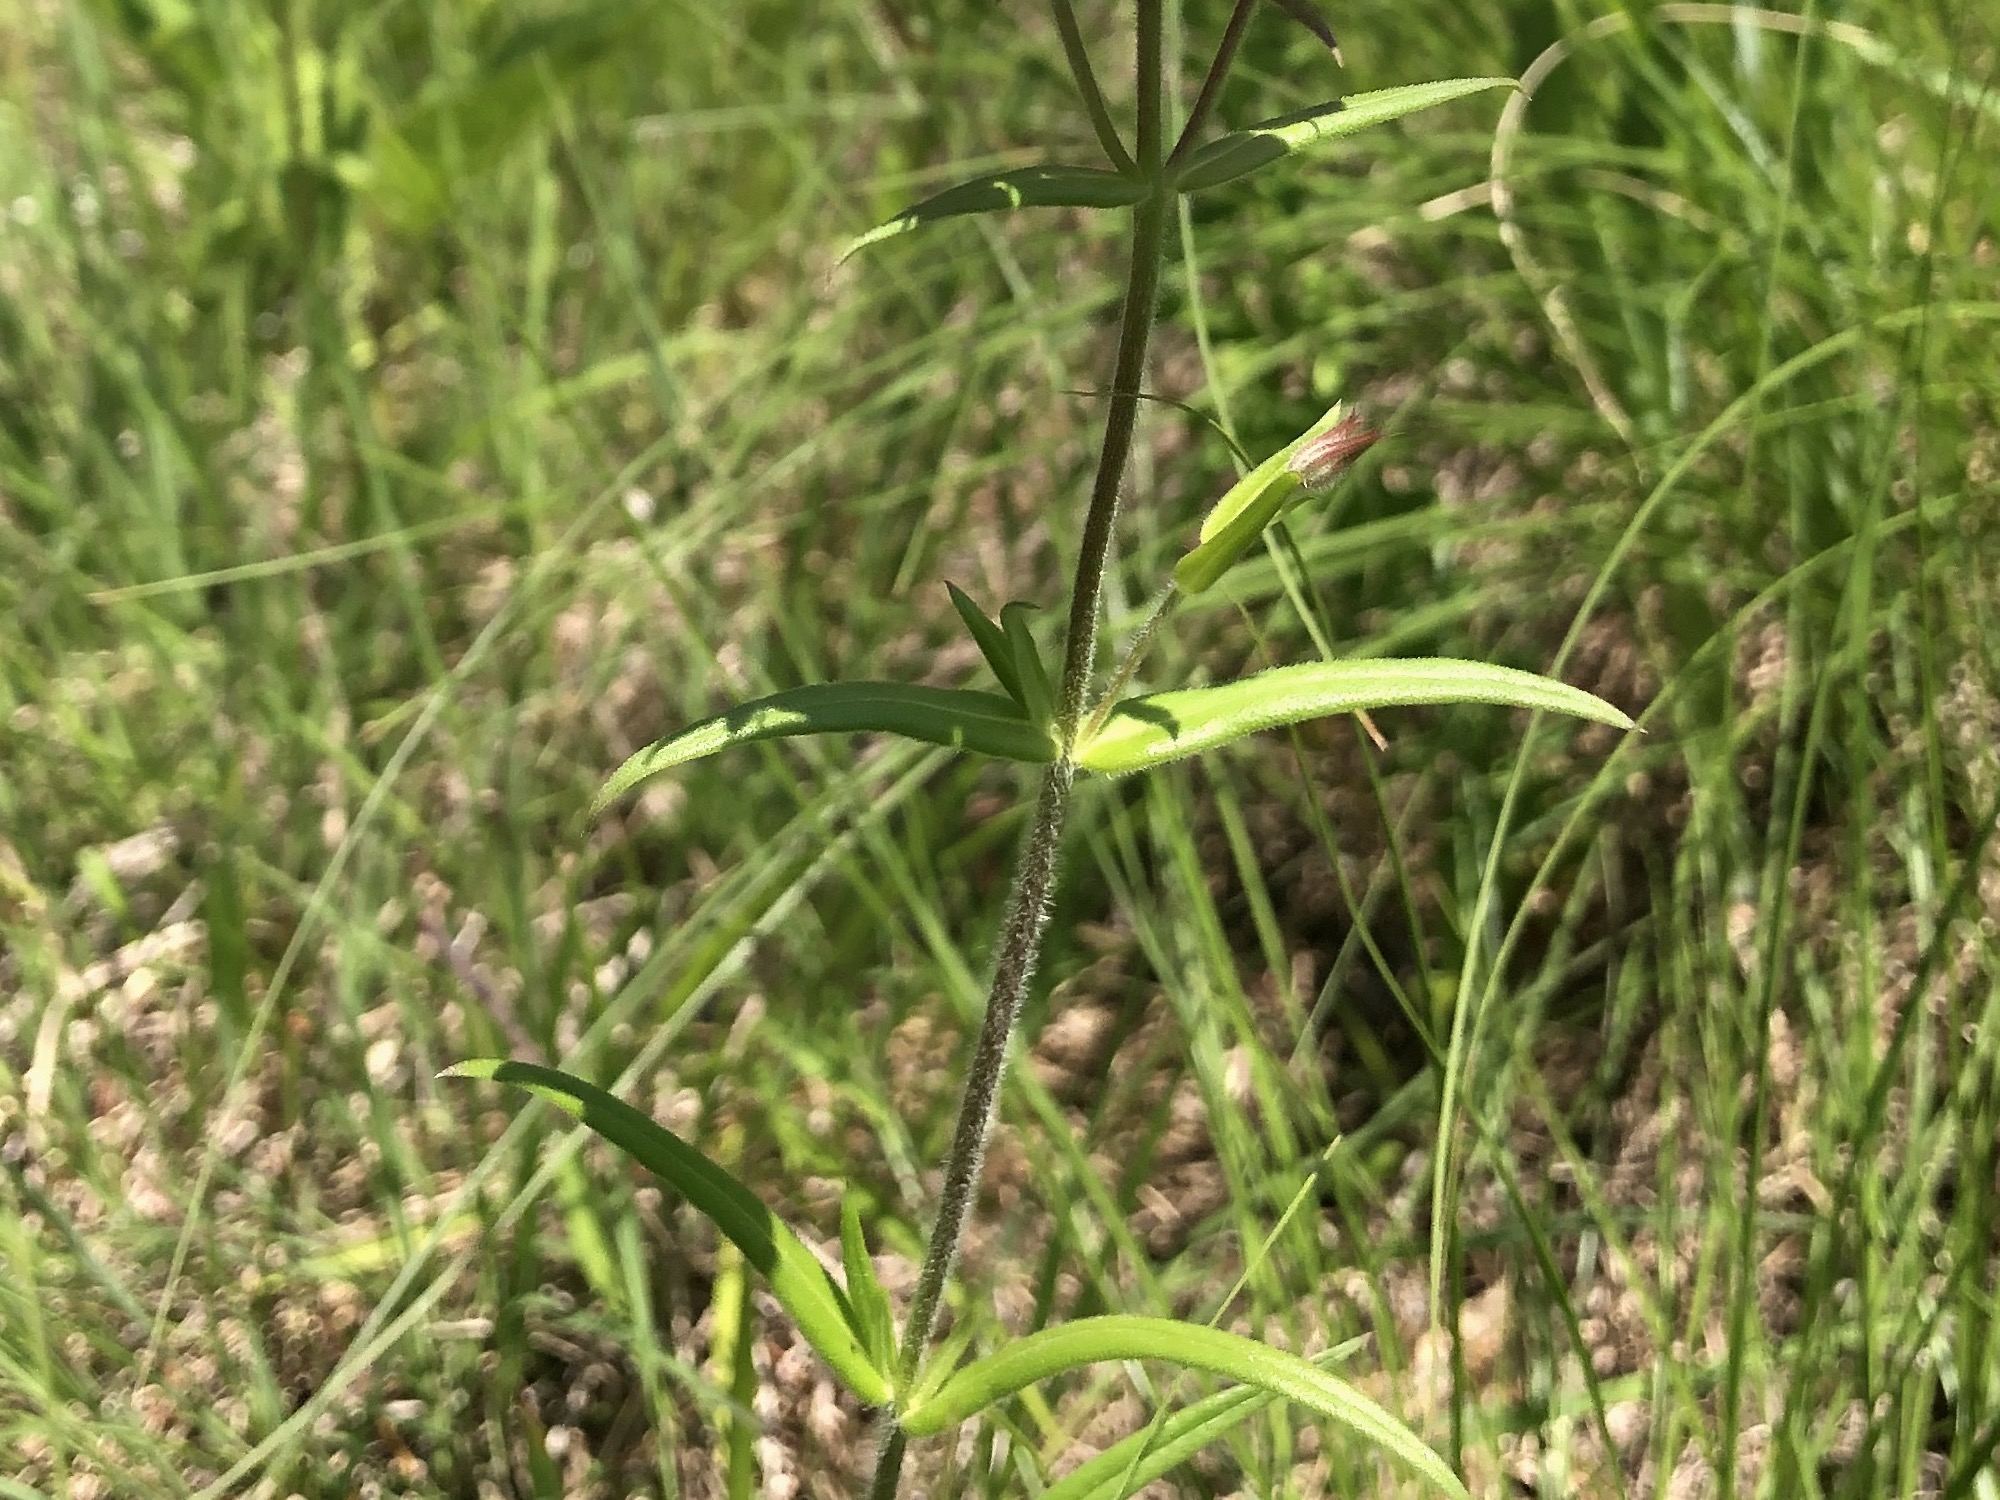 Prairie Phlox stem near UW Arboretum Visitor Center in Madison, Wisconsin on June 1, 2021.